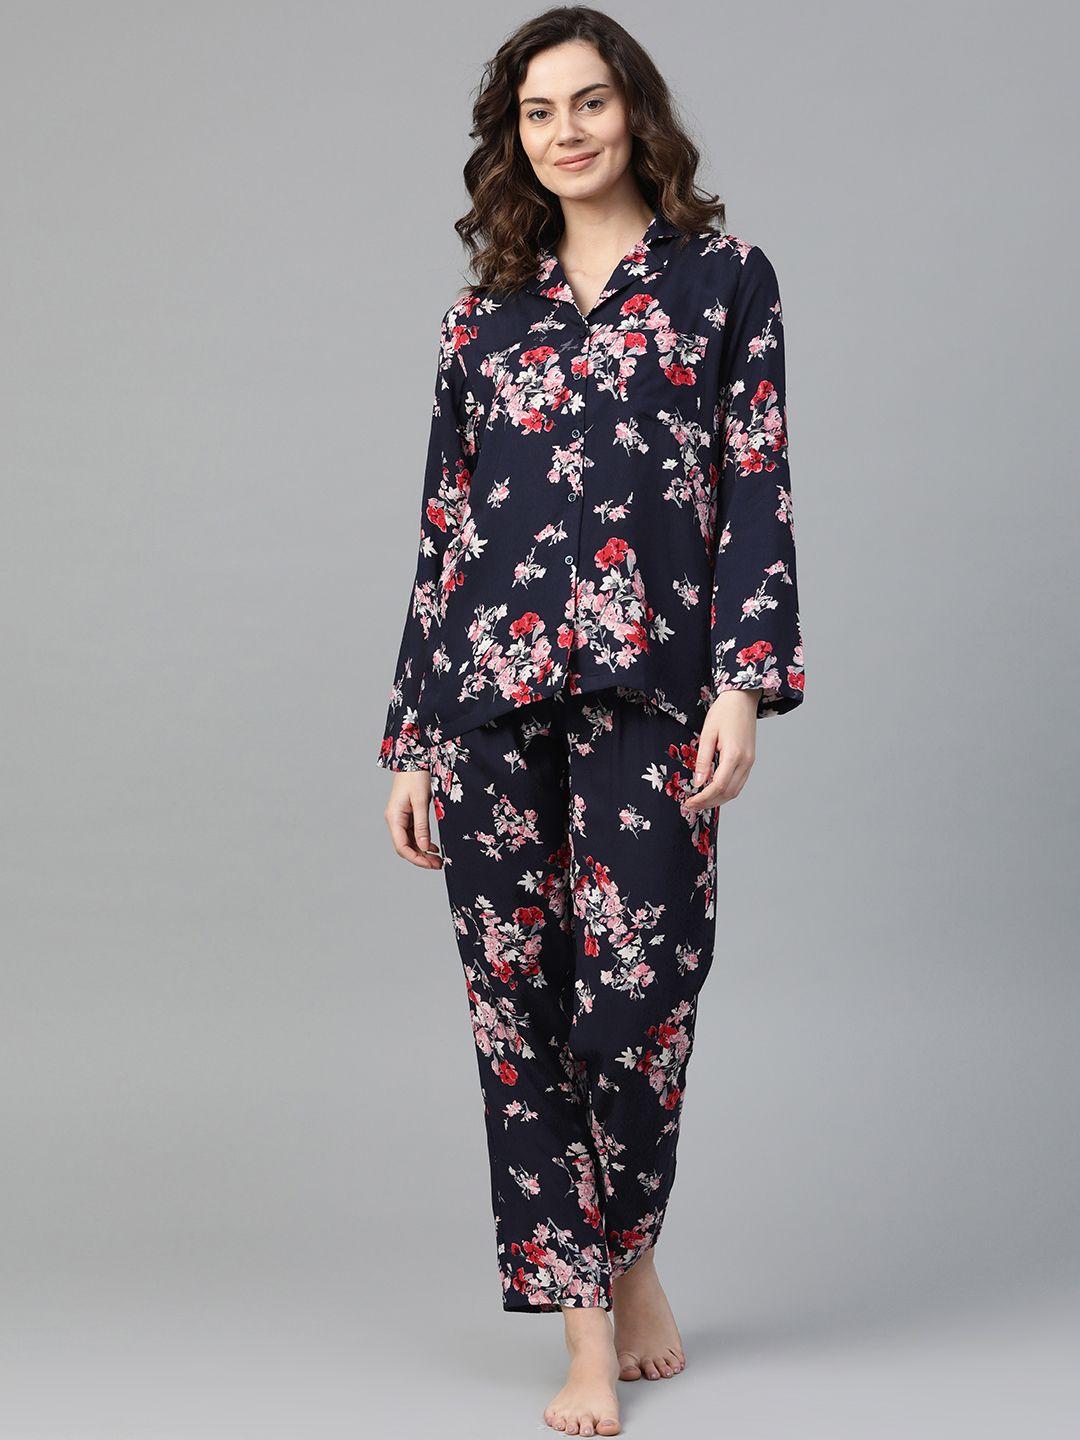 drape in vogue women navy blue & pink floral print pyjamas set